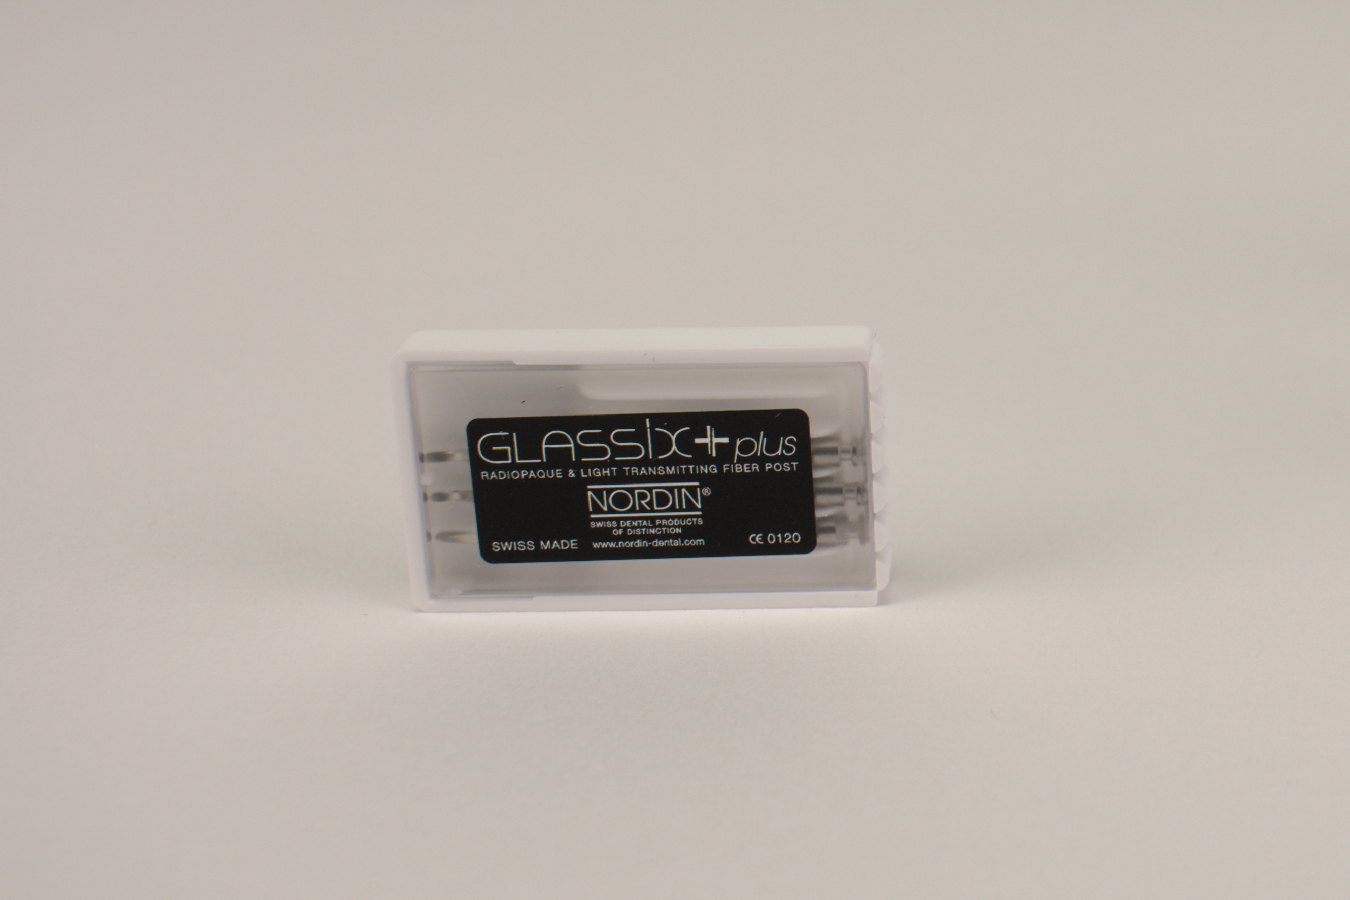 Glassix +Plus Reamer Refür Nr.2  3 Stück